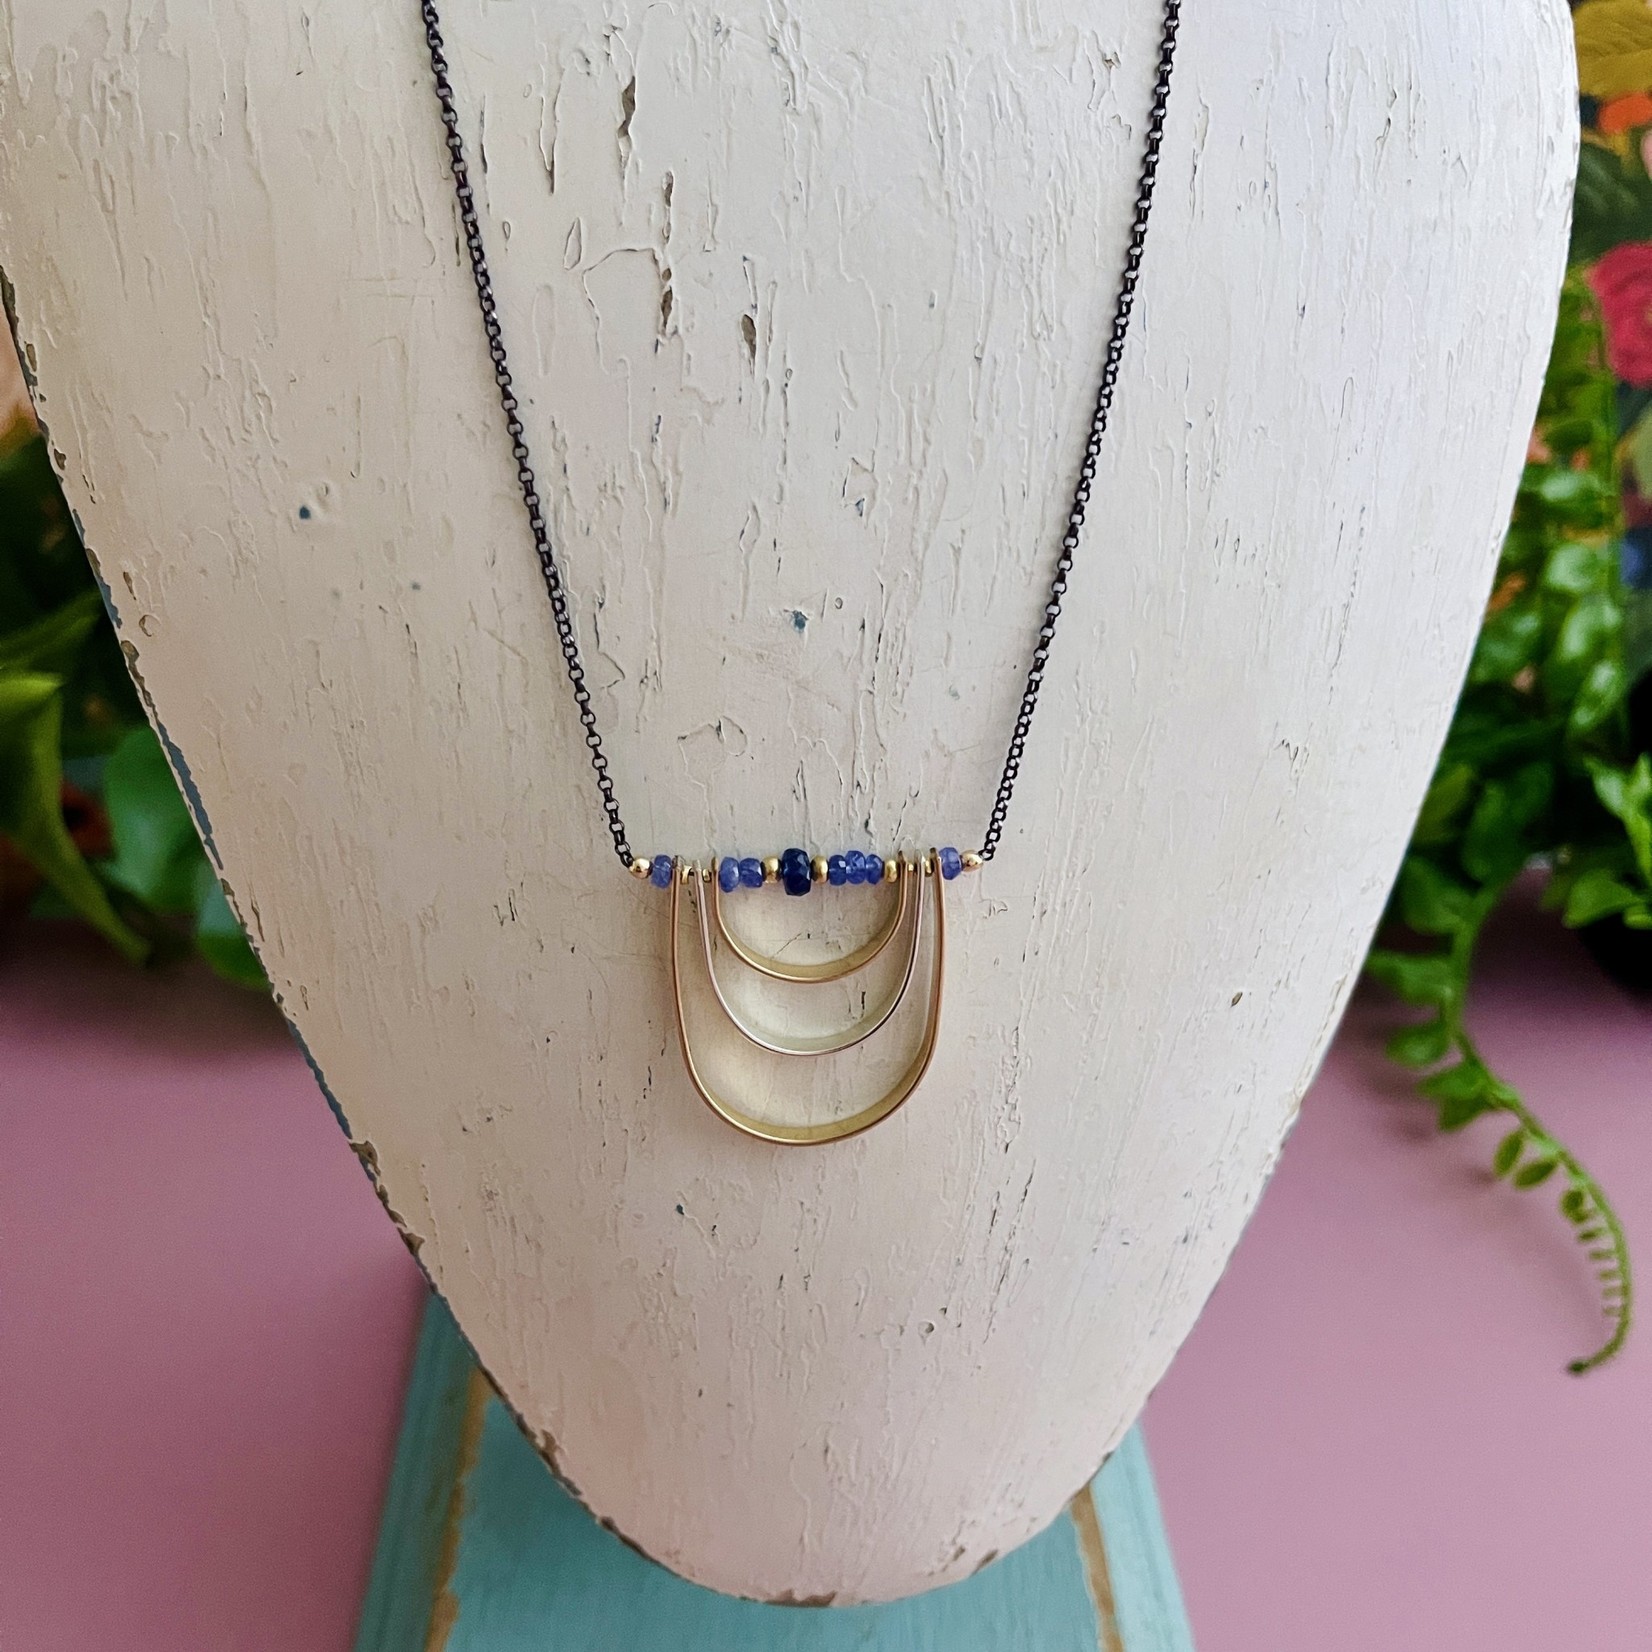 J&I Handmade Tanzanite, blue sapphire, 14kt gold filled + sterling curve necklace. 18"L